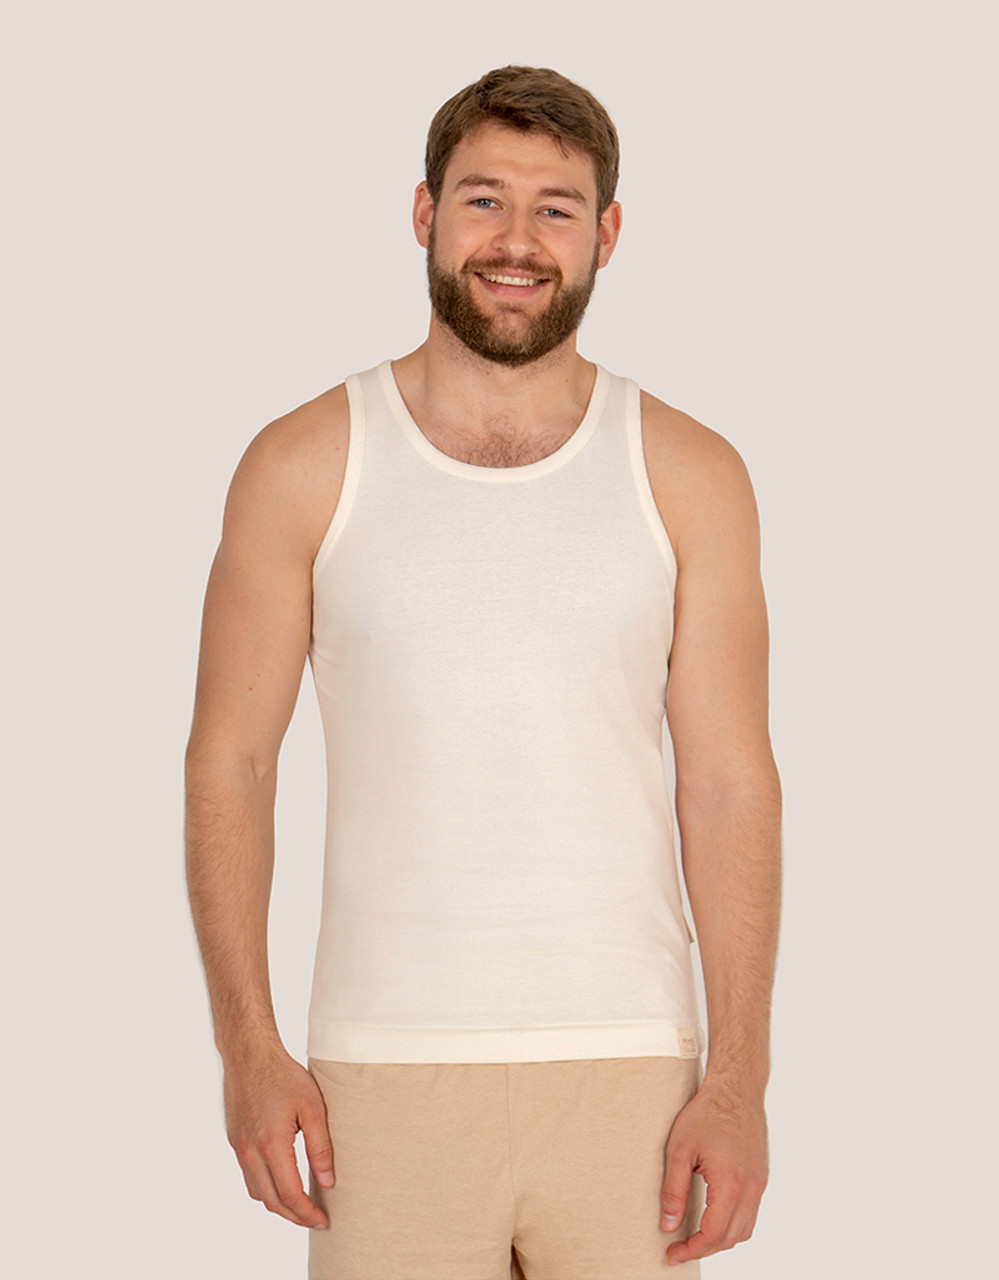 Cami Top, White - 100% Organic Cotton Sleepwear